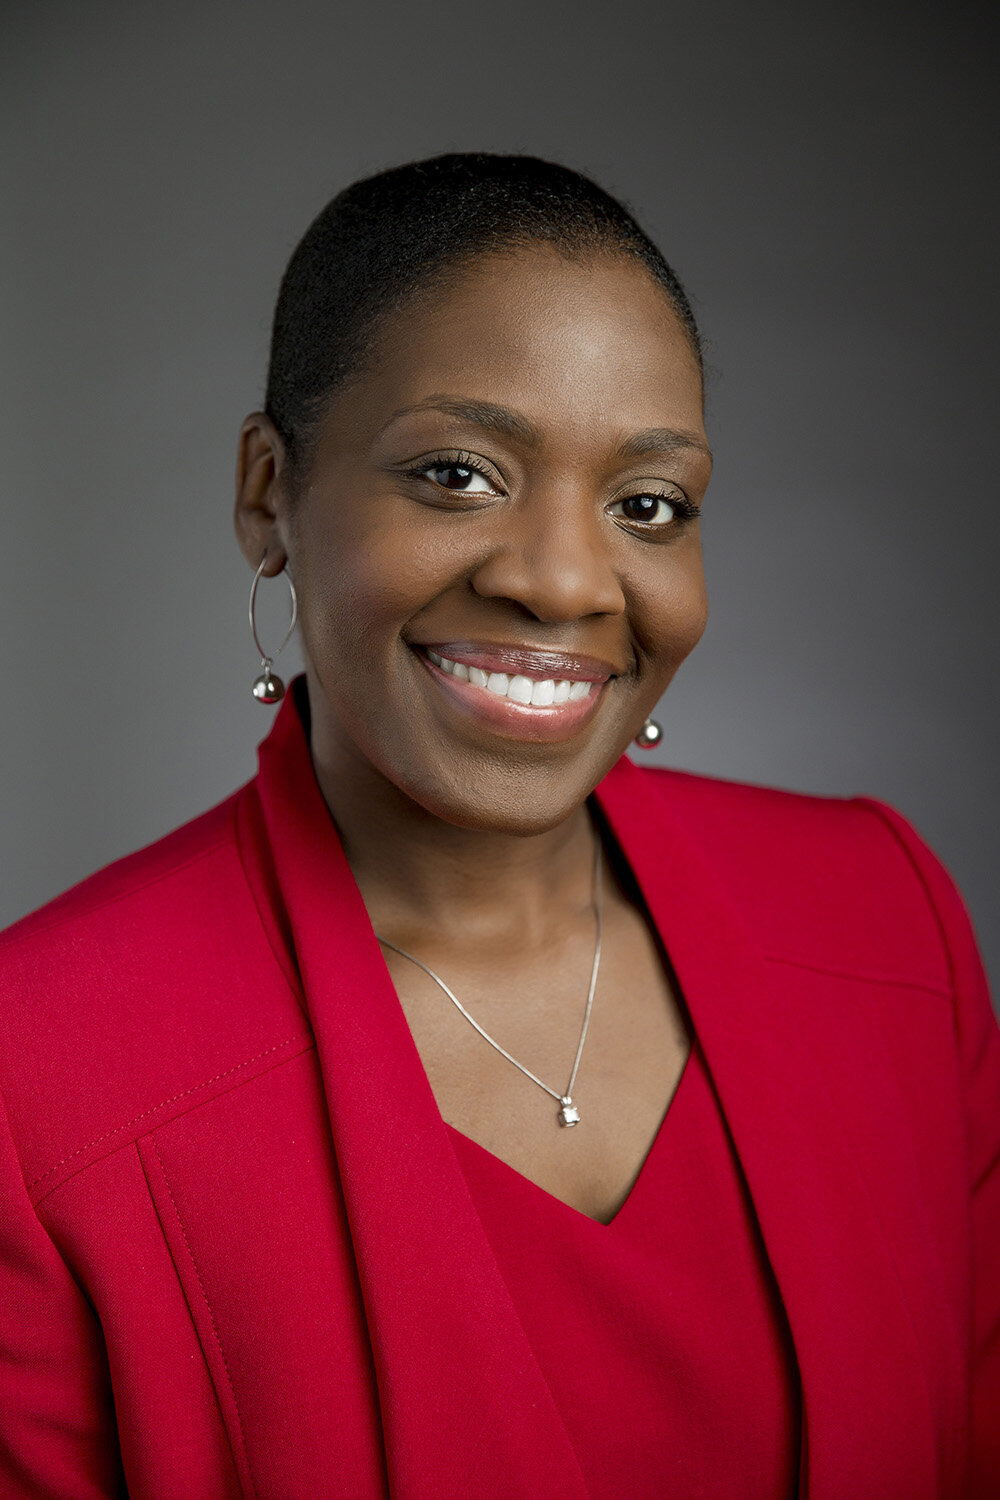 african american female executive headshot on grey.JPG